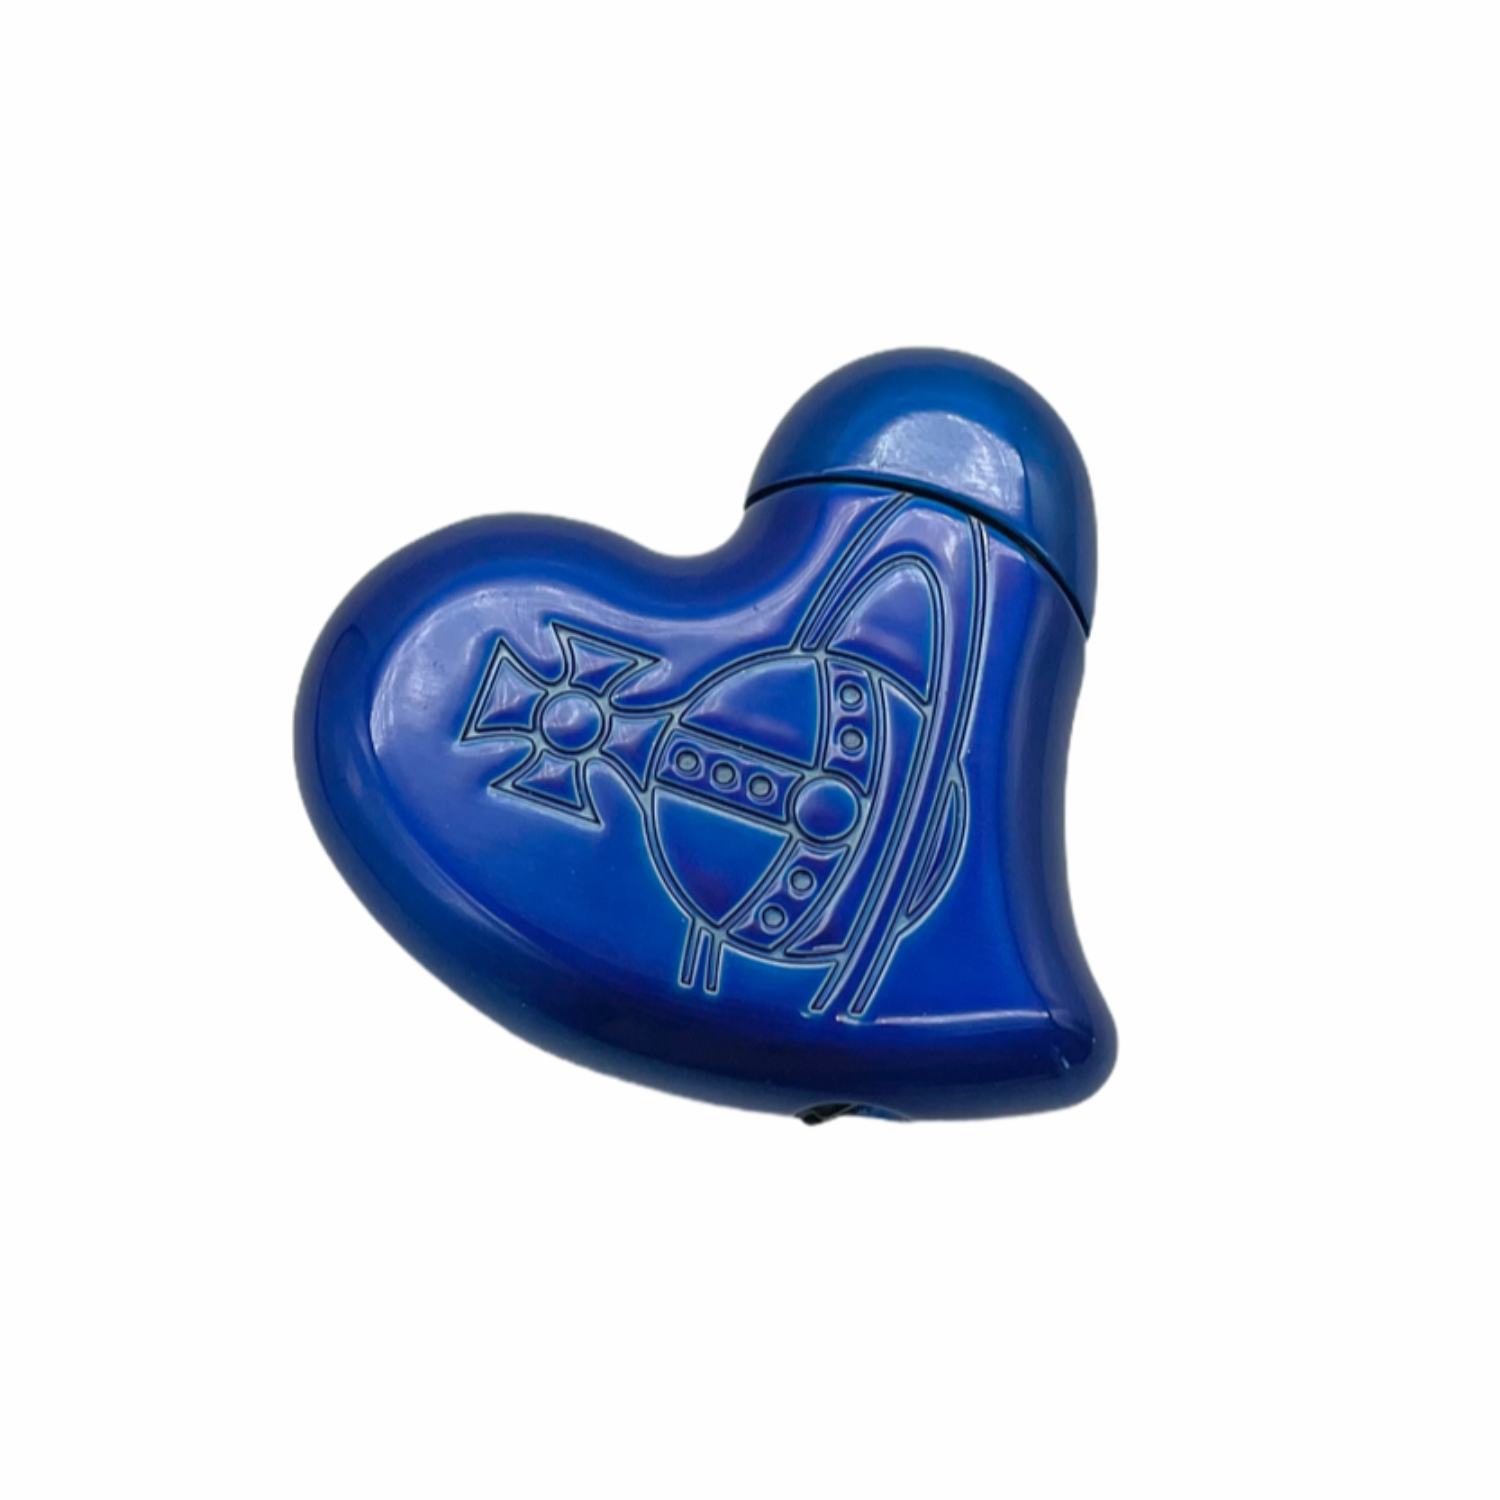 Vintage Vivienne Westwood Heart Orb Lighter in Blue | NITRYL